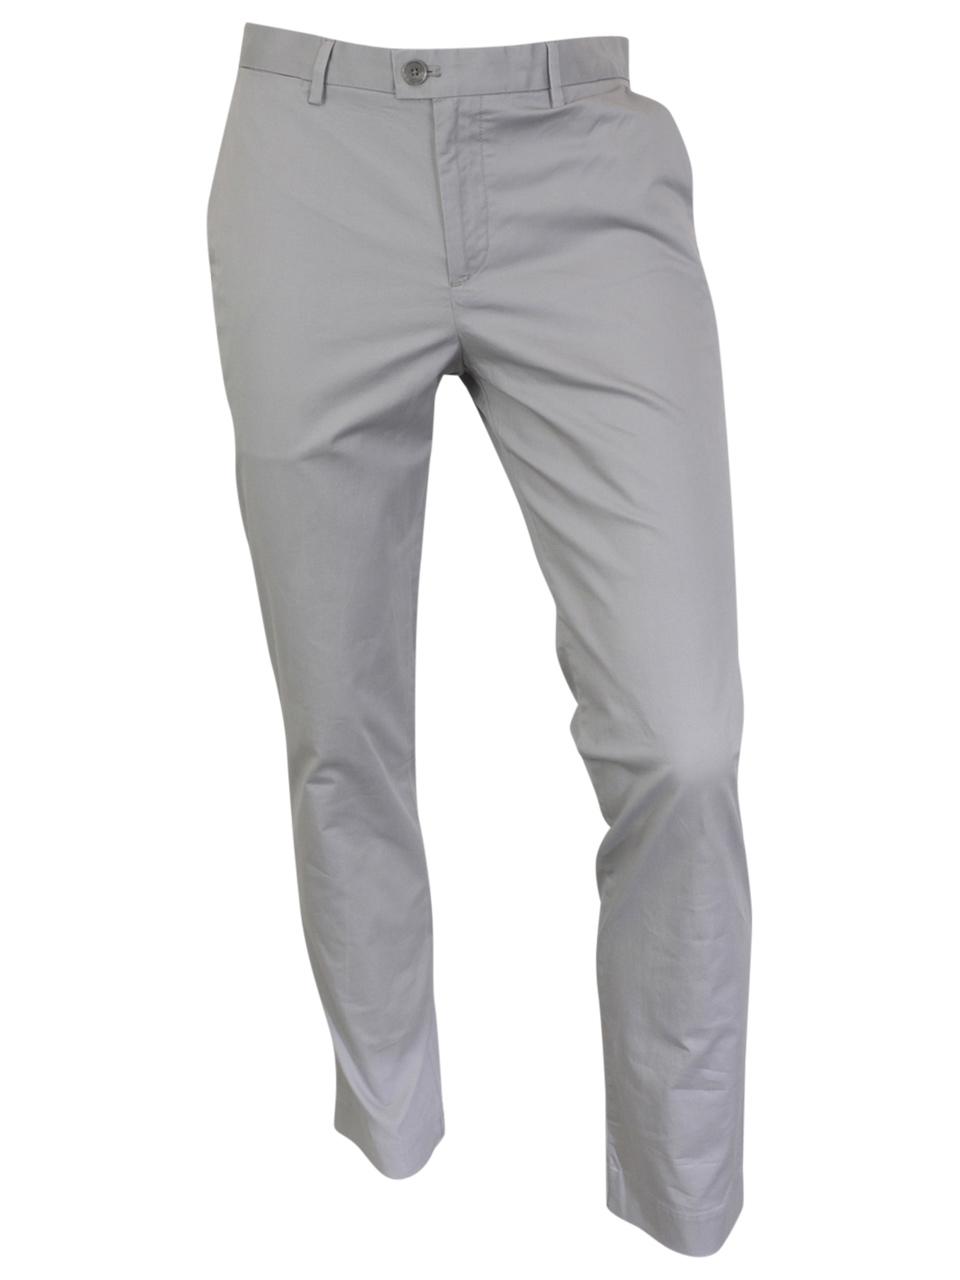 Calvin Klein Men\'s Slim Fit Solid Stretch Chino Pants | eBay